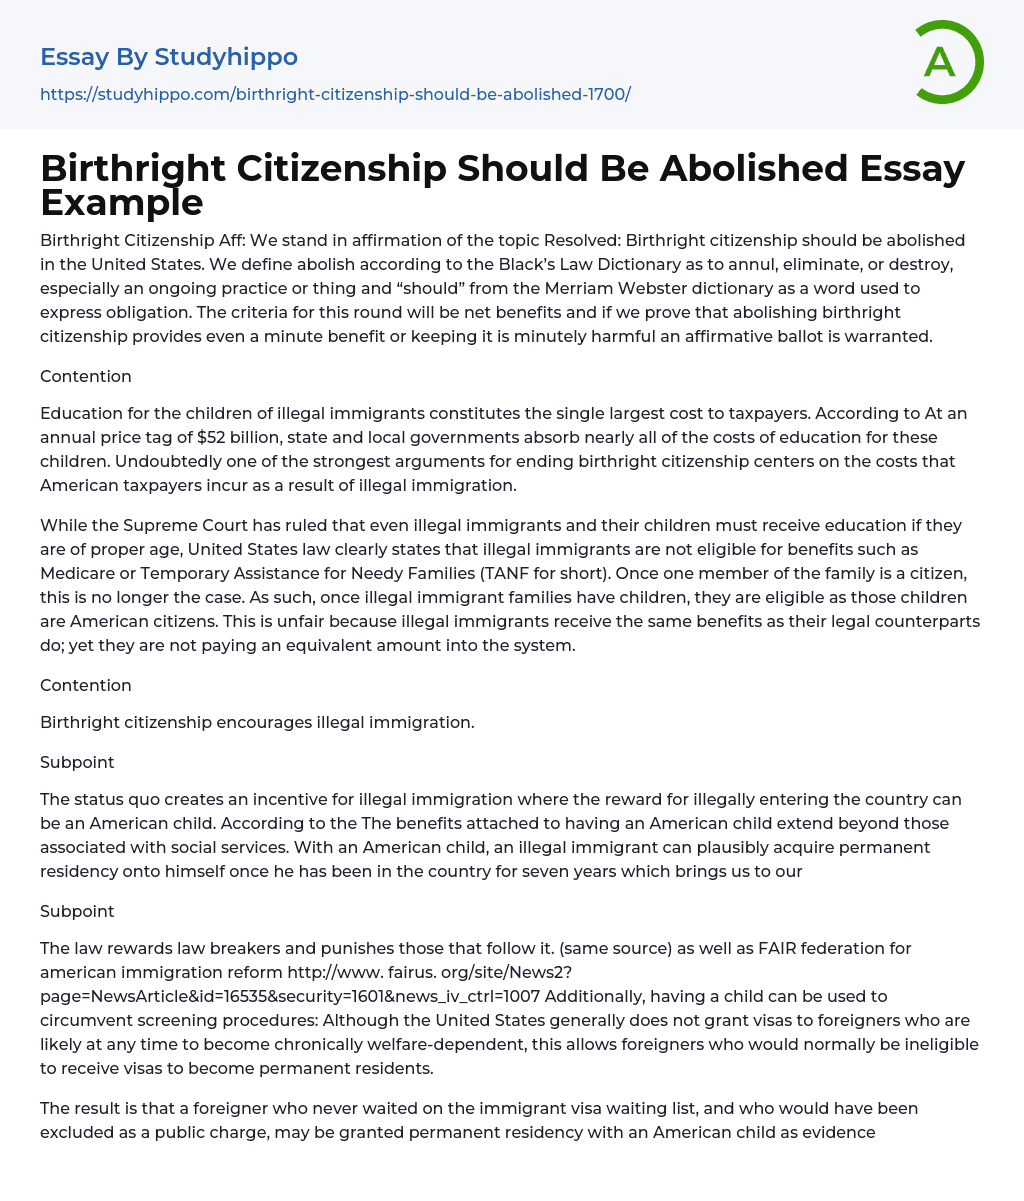 Birthright Citizenship Should Be Abolished Essay Example